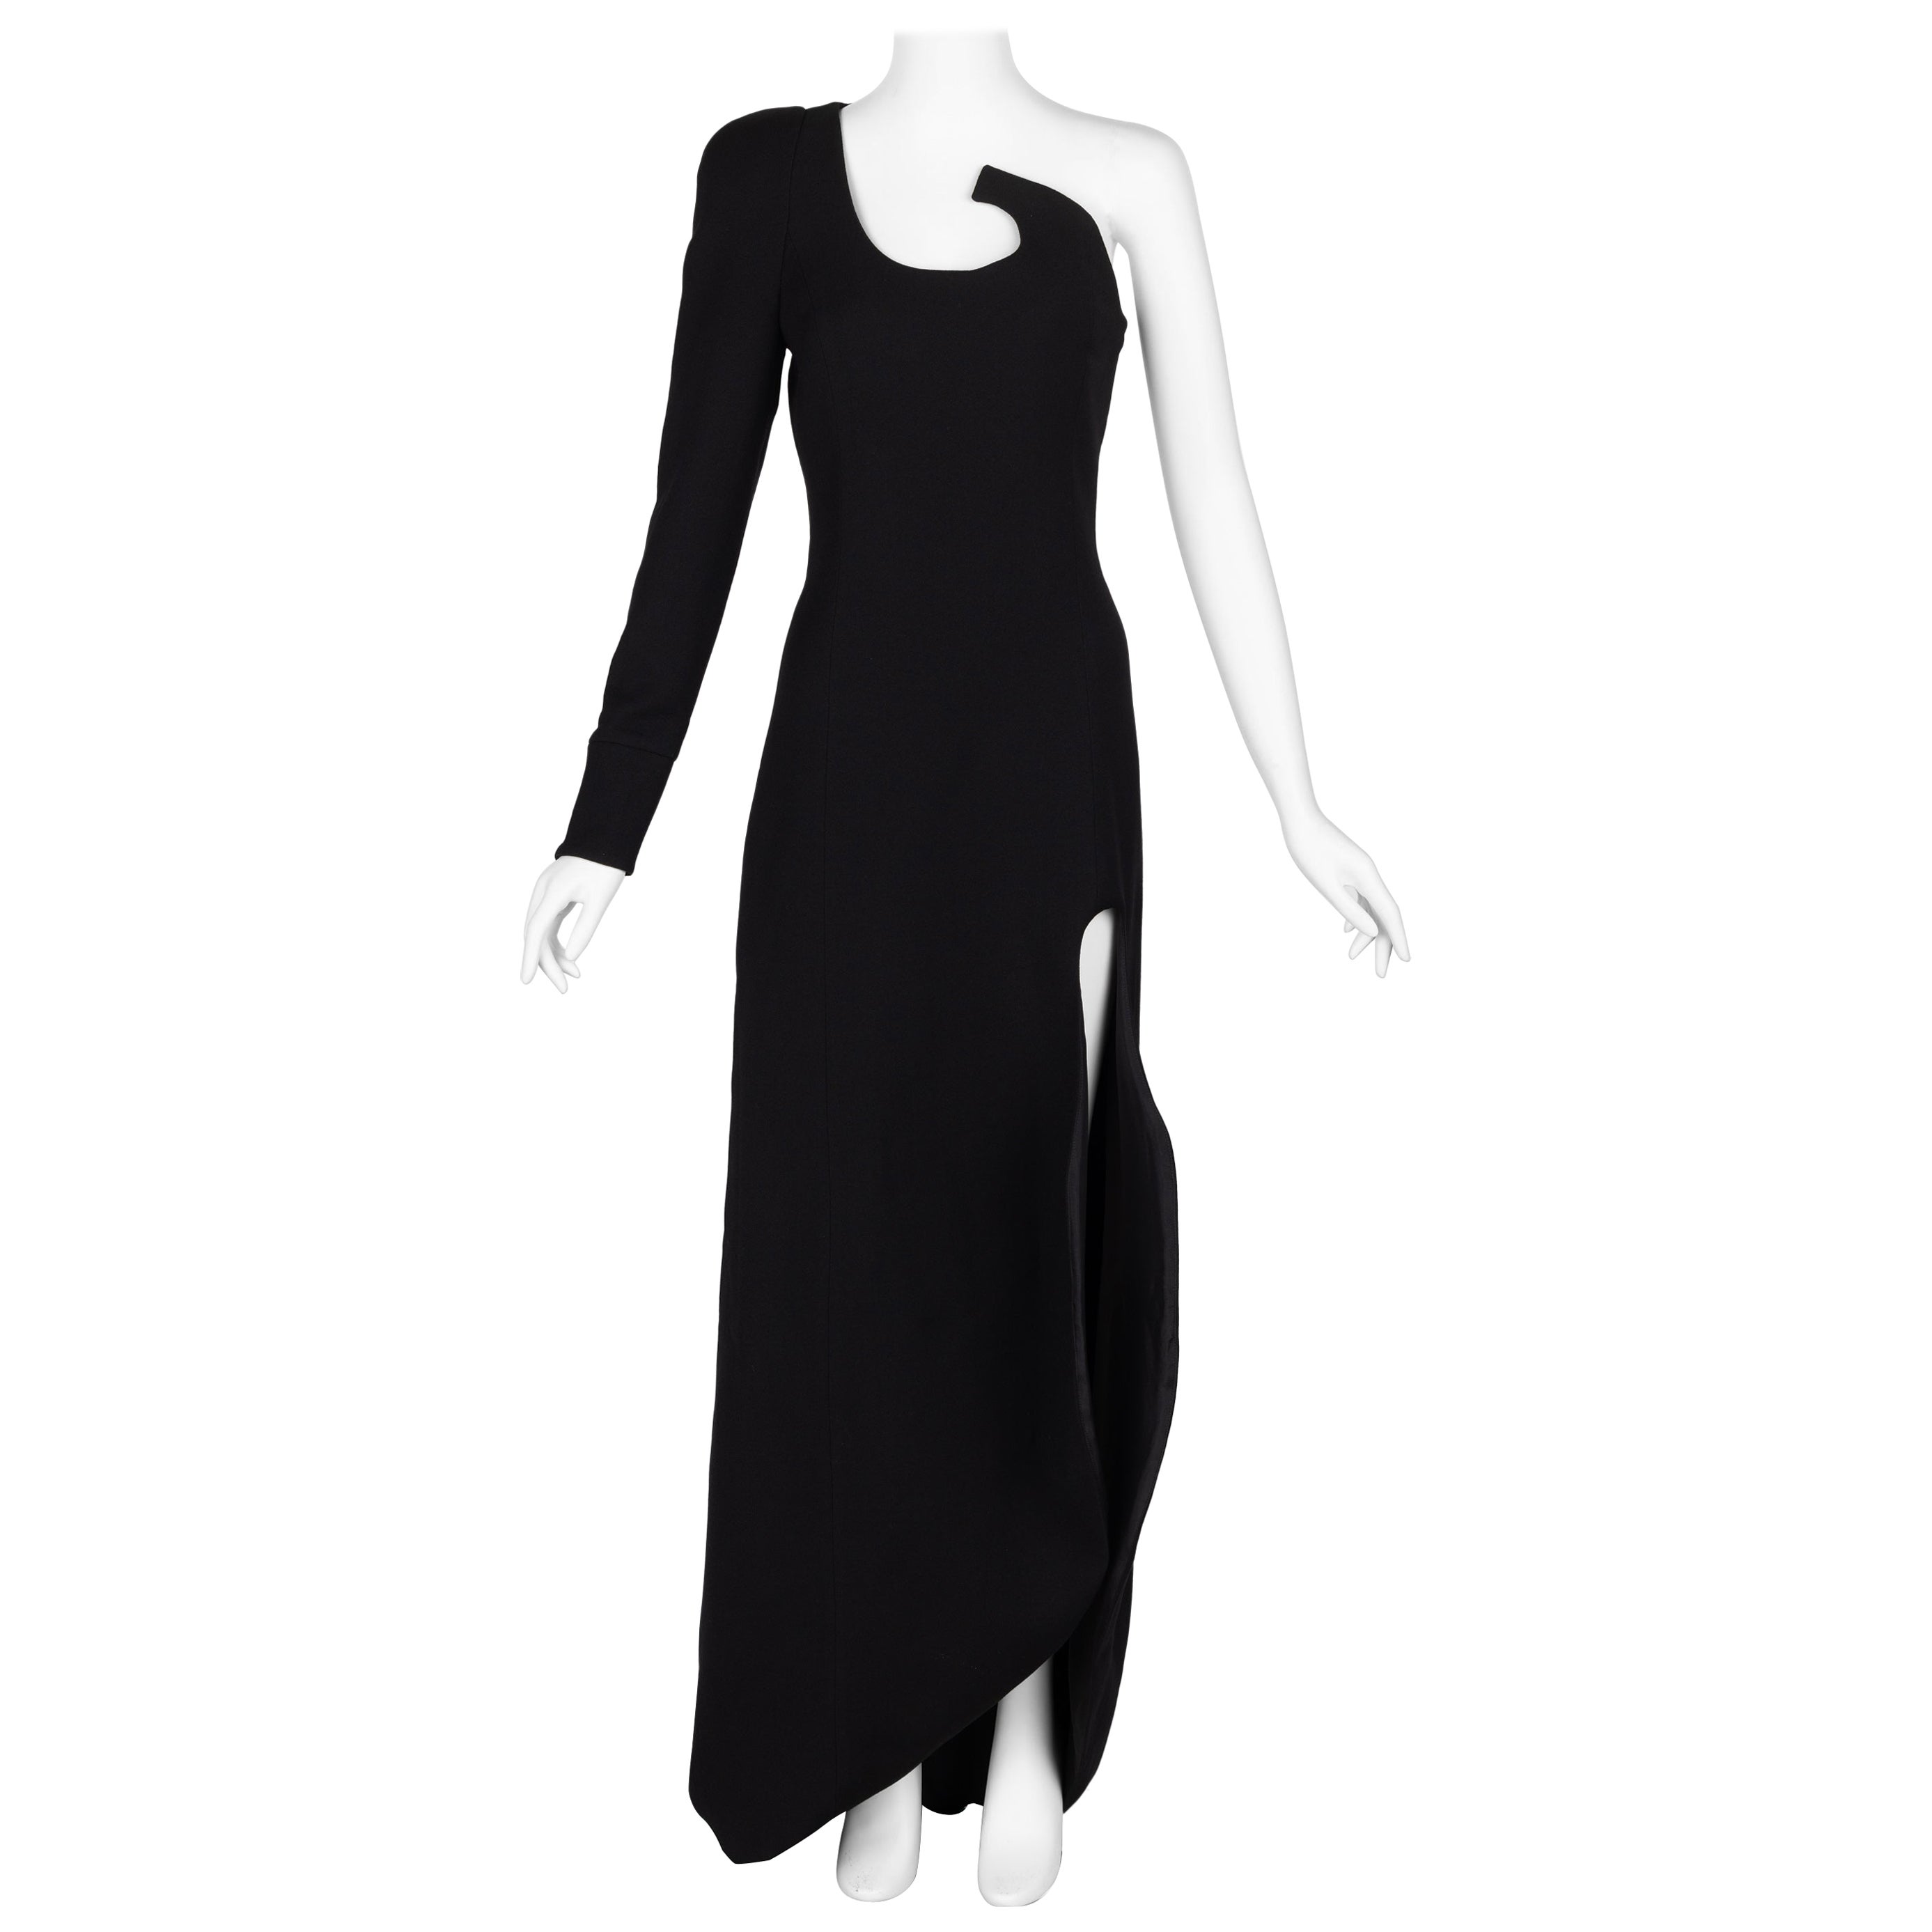 Ronald van der Kemp Demi Couture Fall 2018 Sculptural Black Dress  For Sale